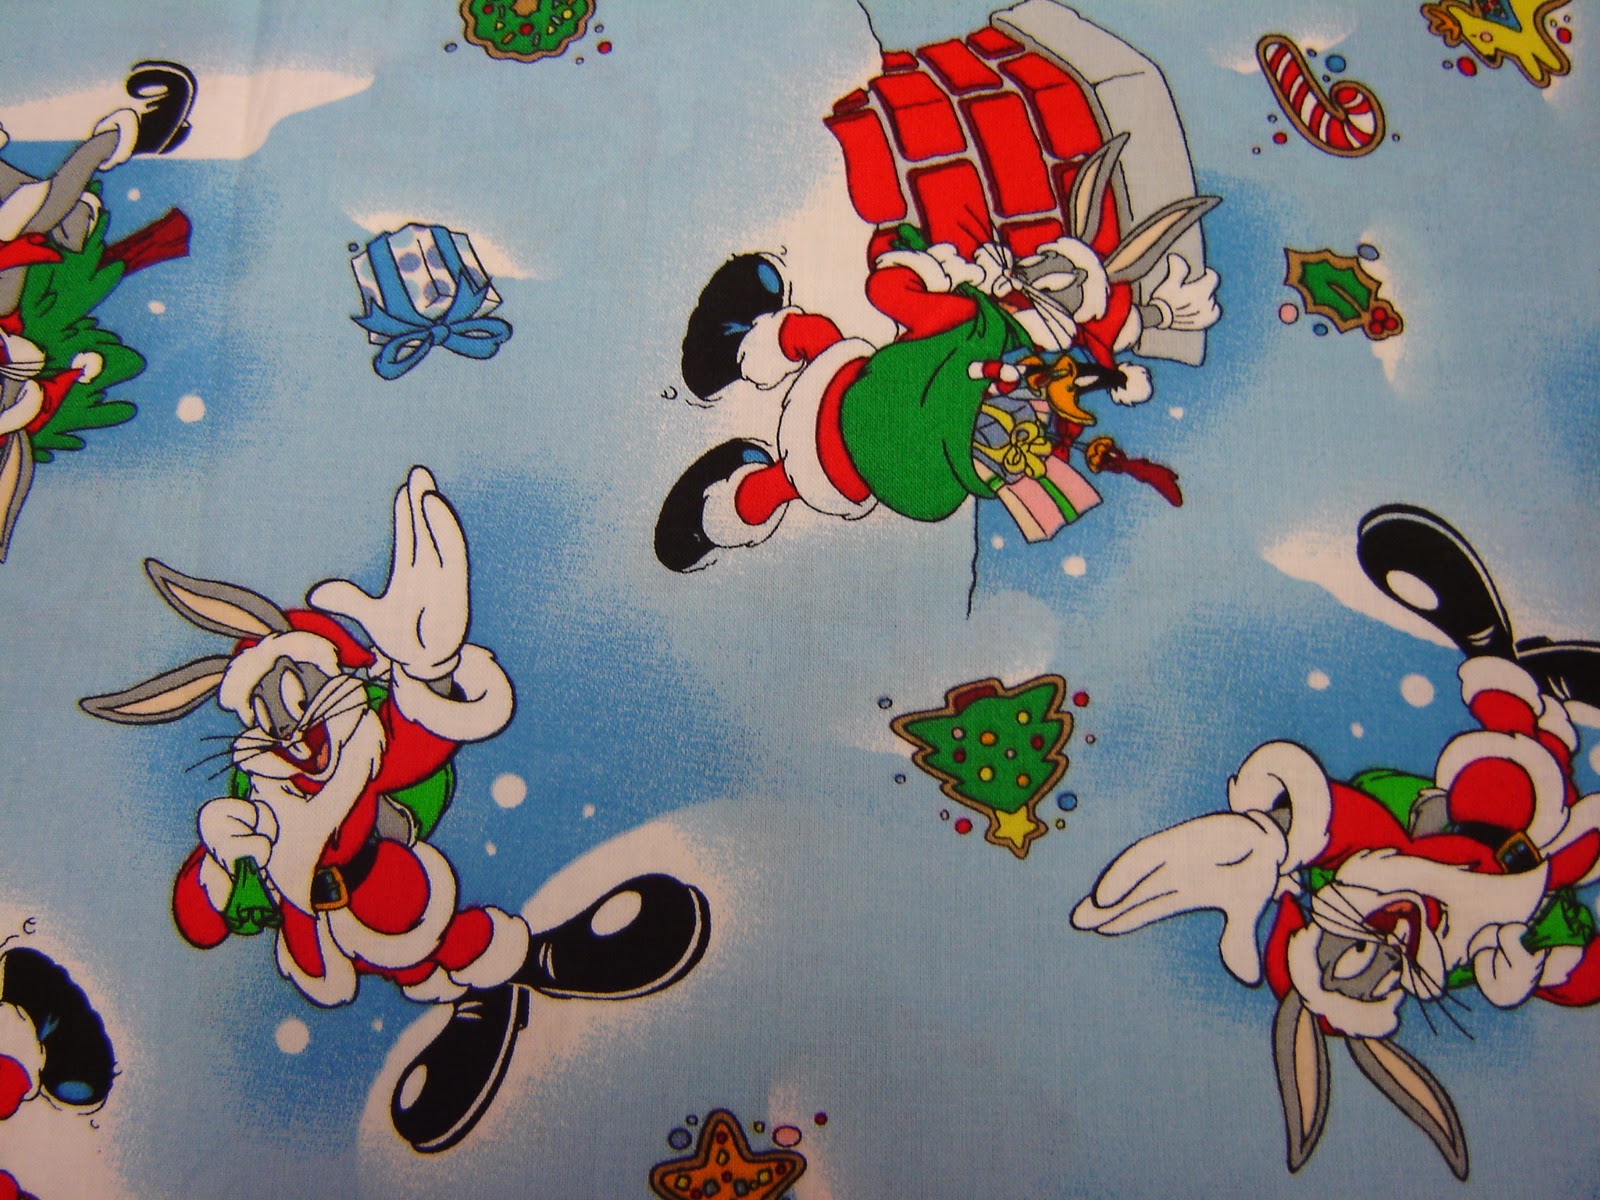 Looney tunes christmas bugs bunny c JPG wallpaper 1600x1200 184438